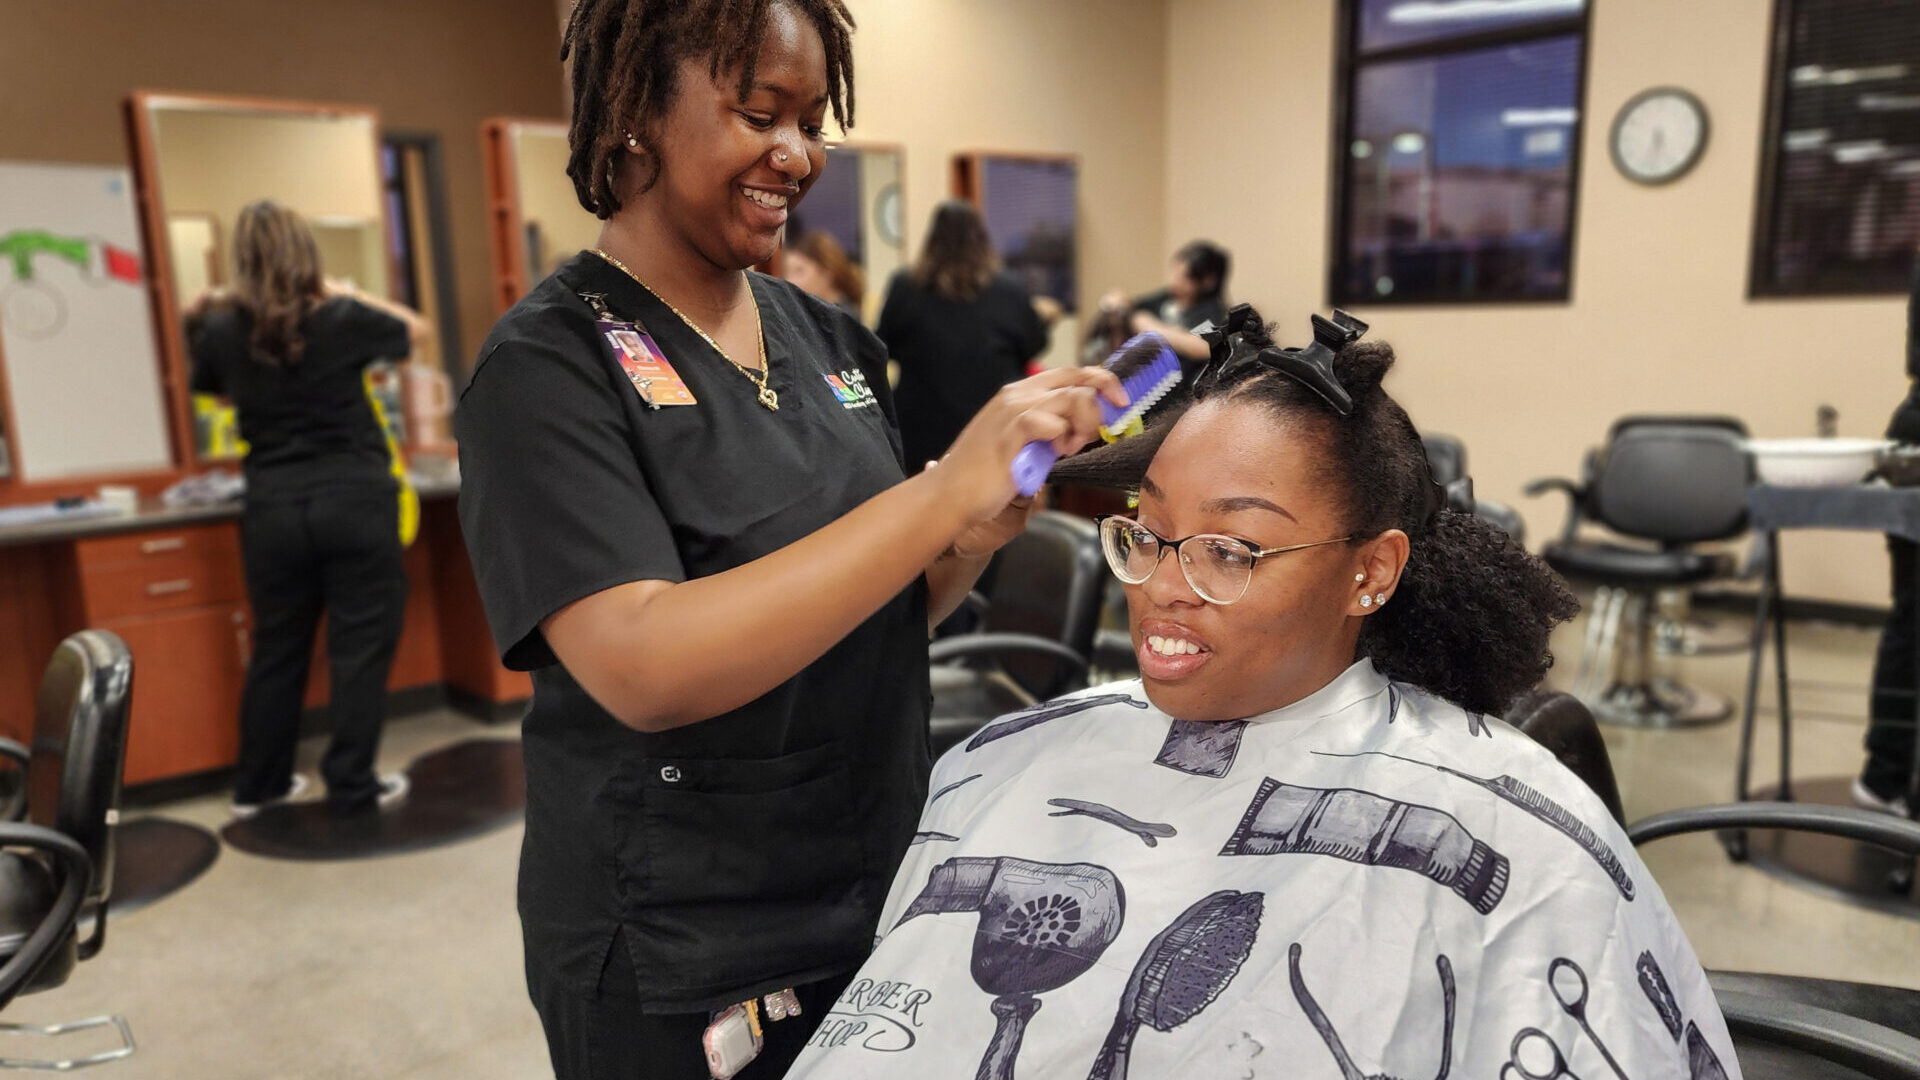 Student styling customer hair